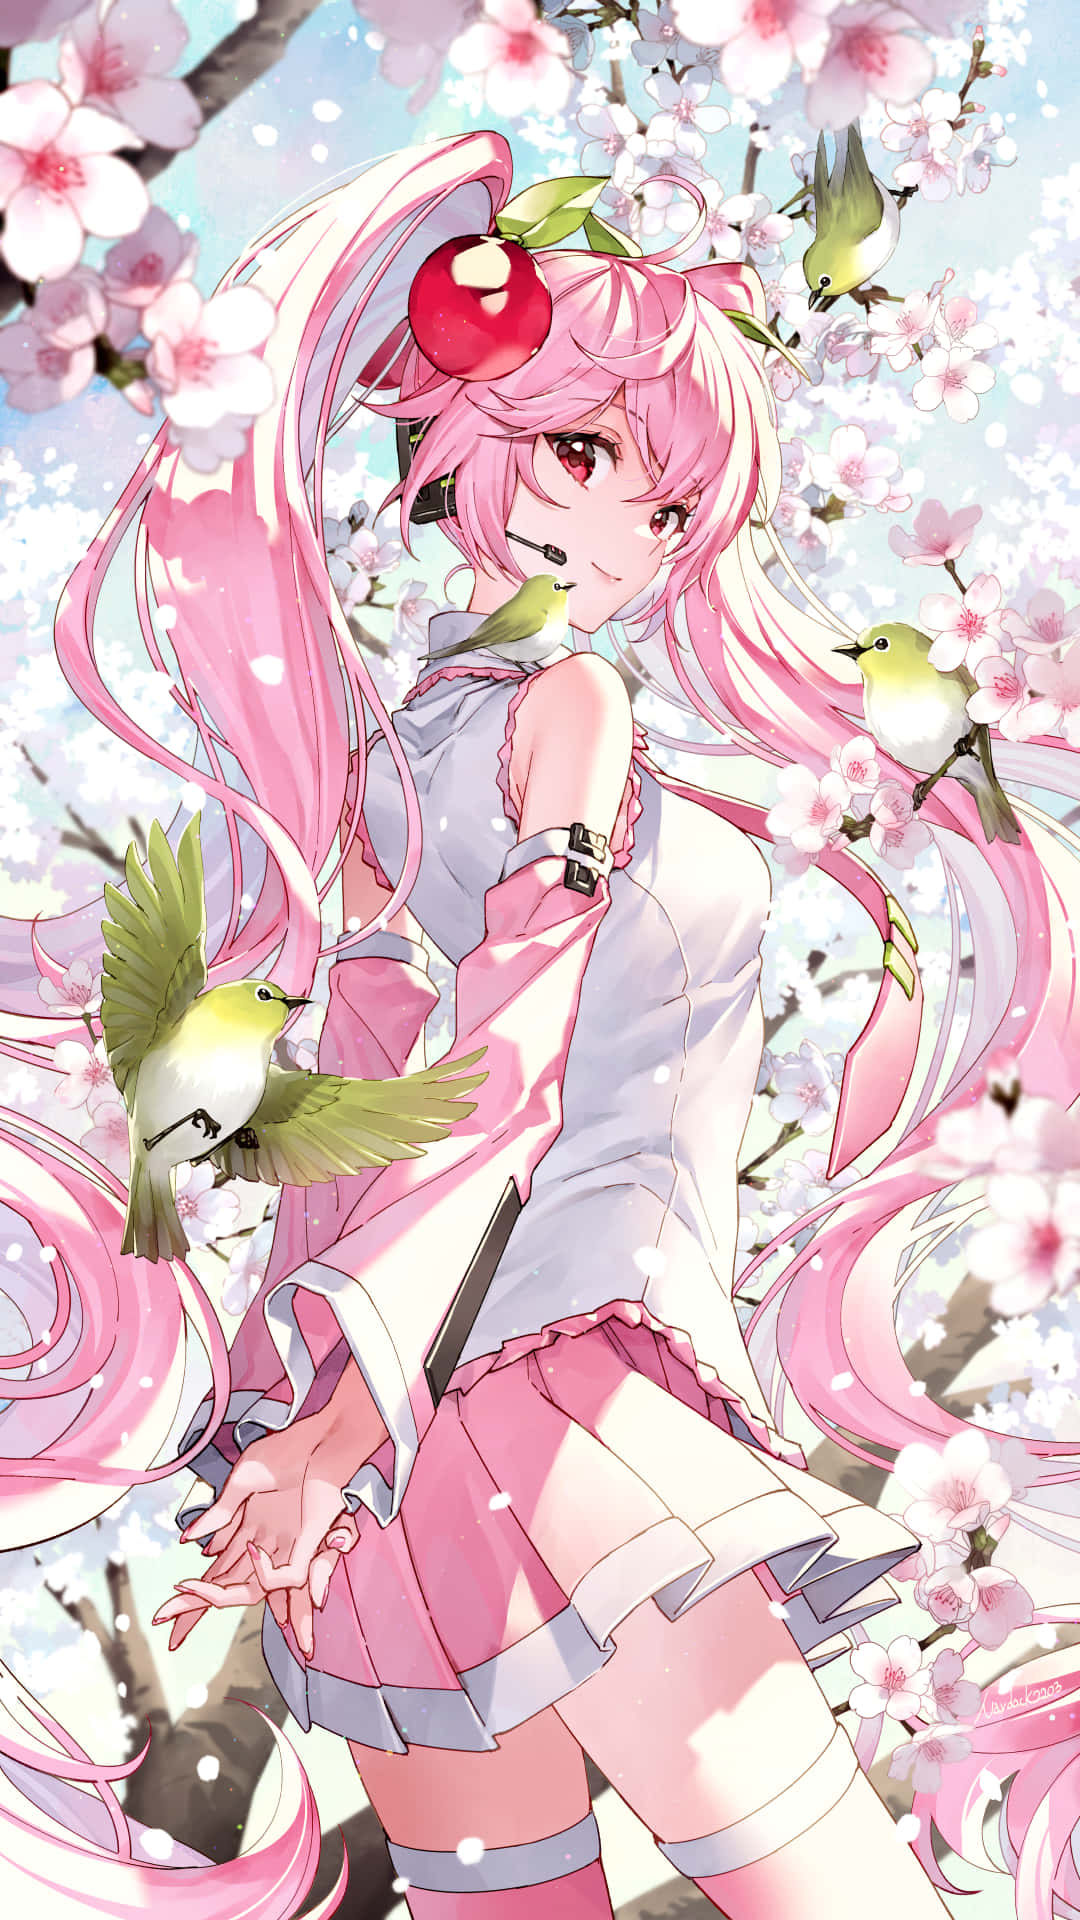 Springtime Wondrous Beauty - Sakura Miku @wallpapers Wallpaper